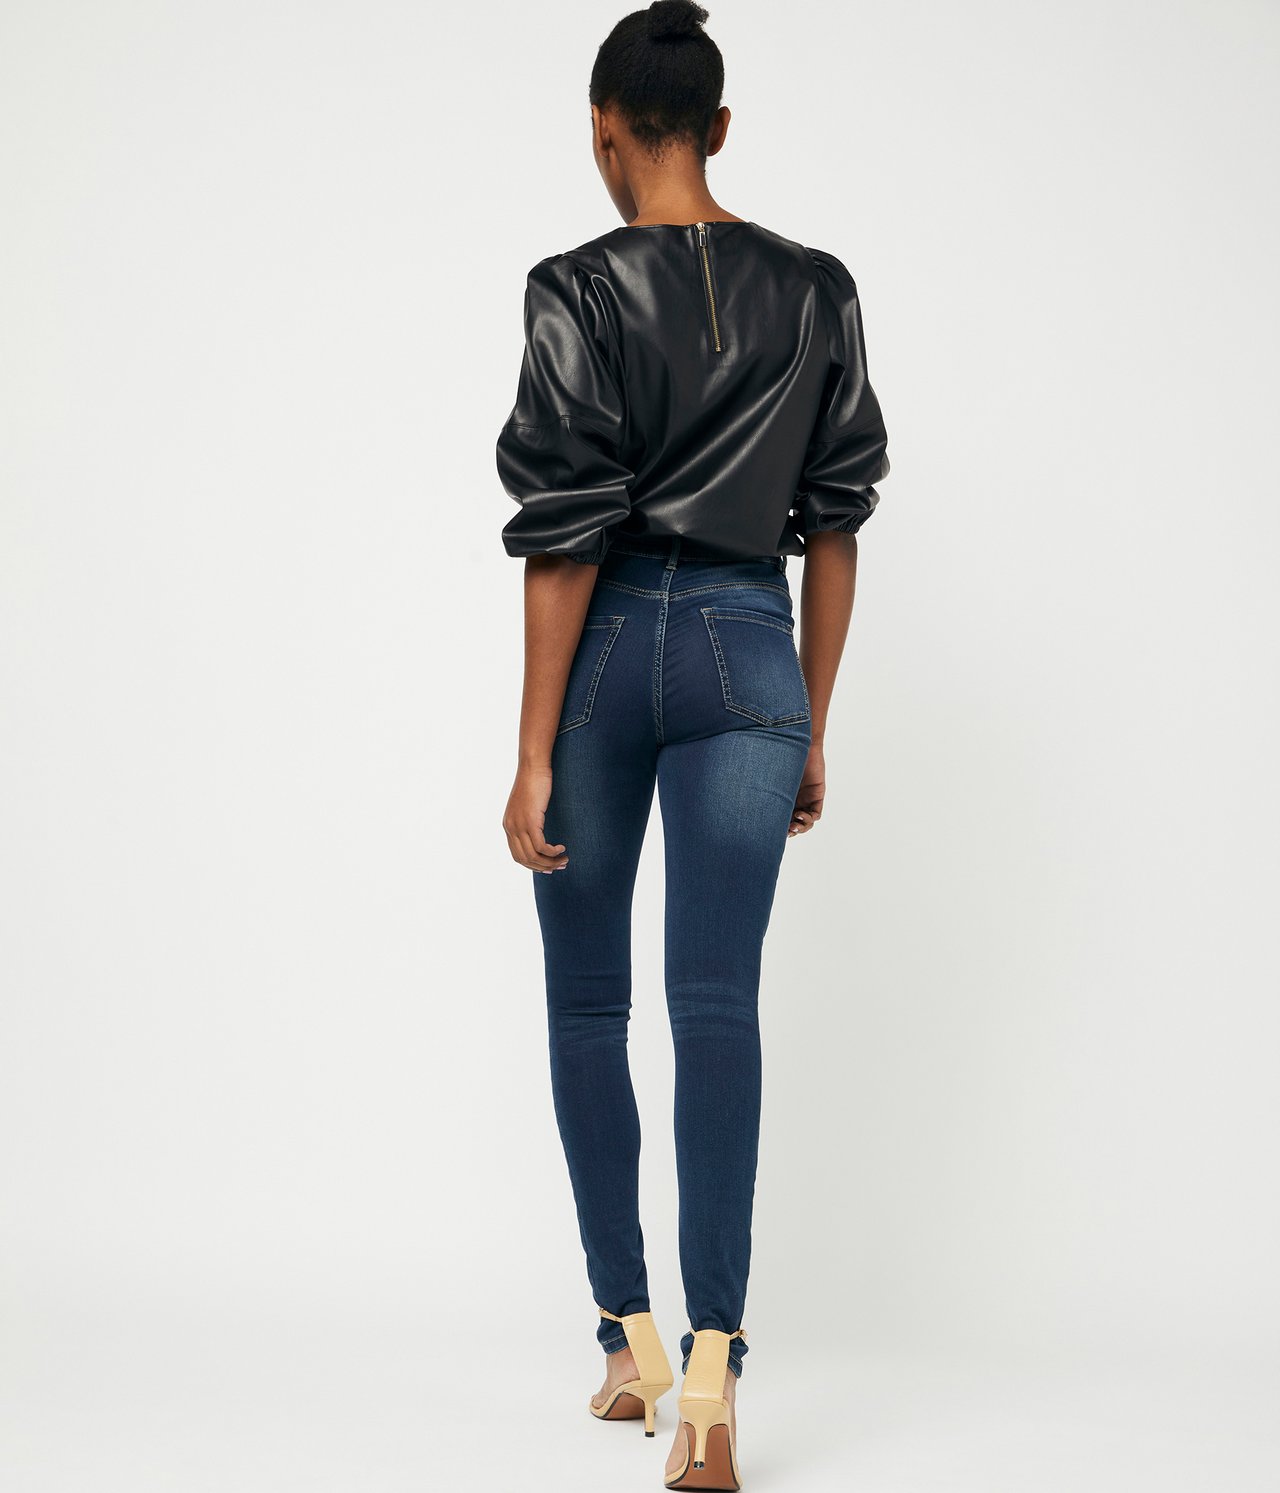 Super slim jeans extra long leg - Mörk denim - 2